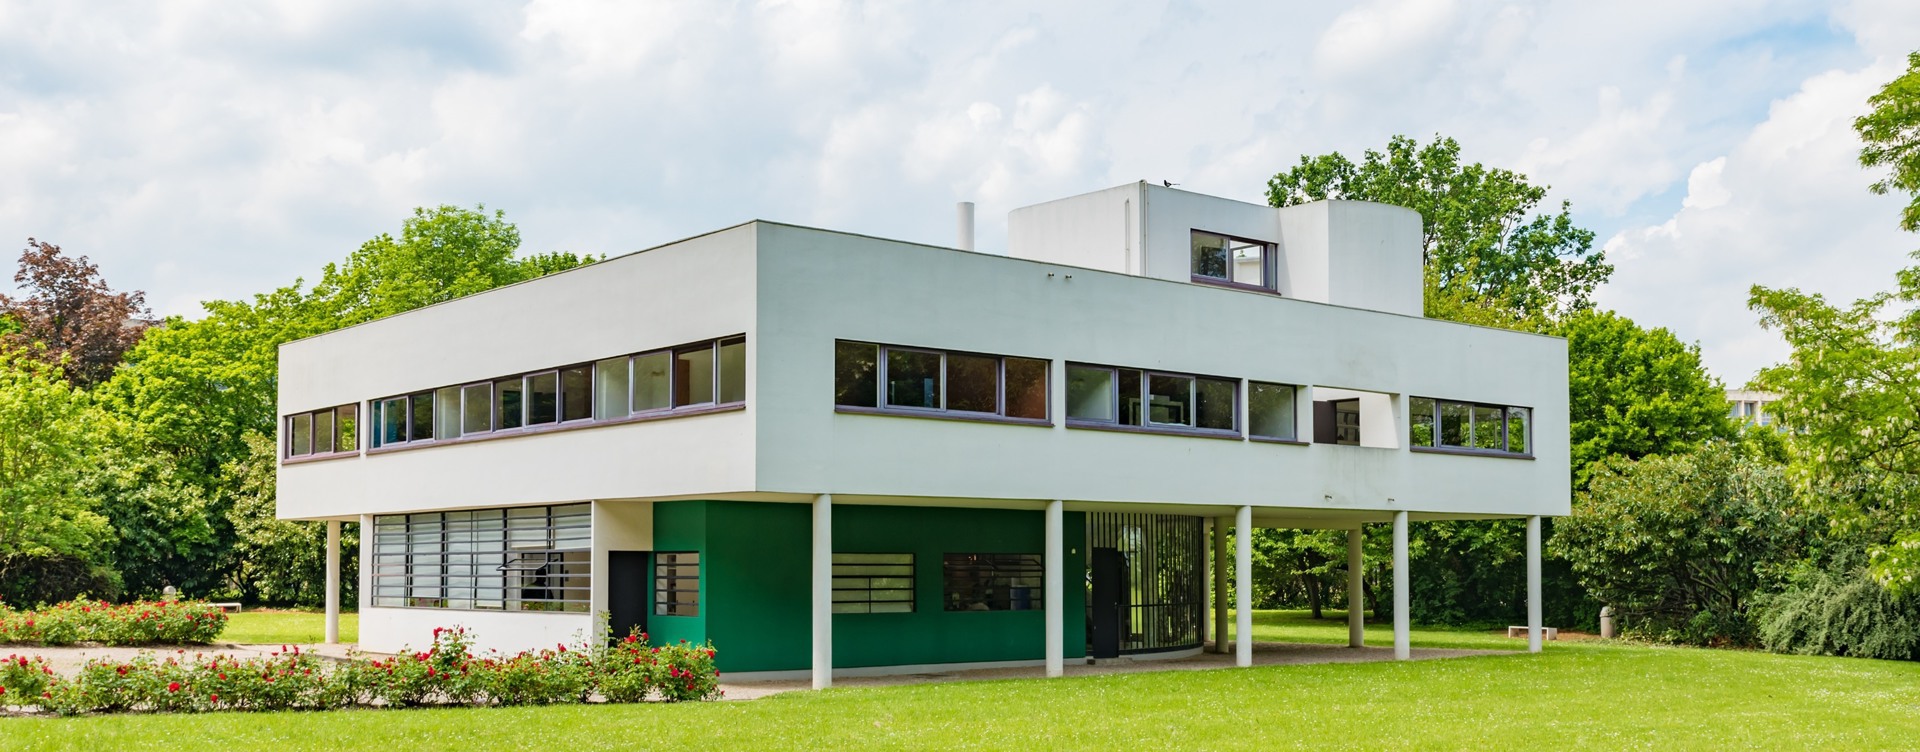 Enjoy the creative buildings of Le Corbusier